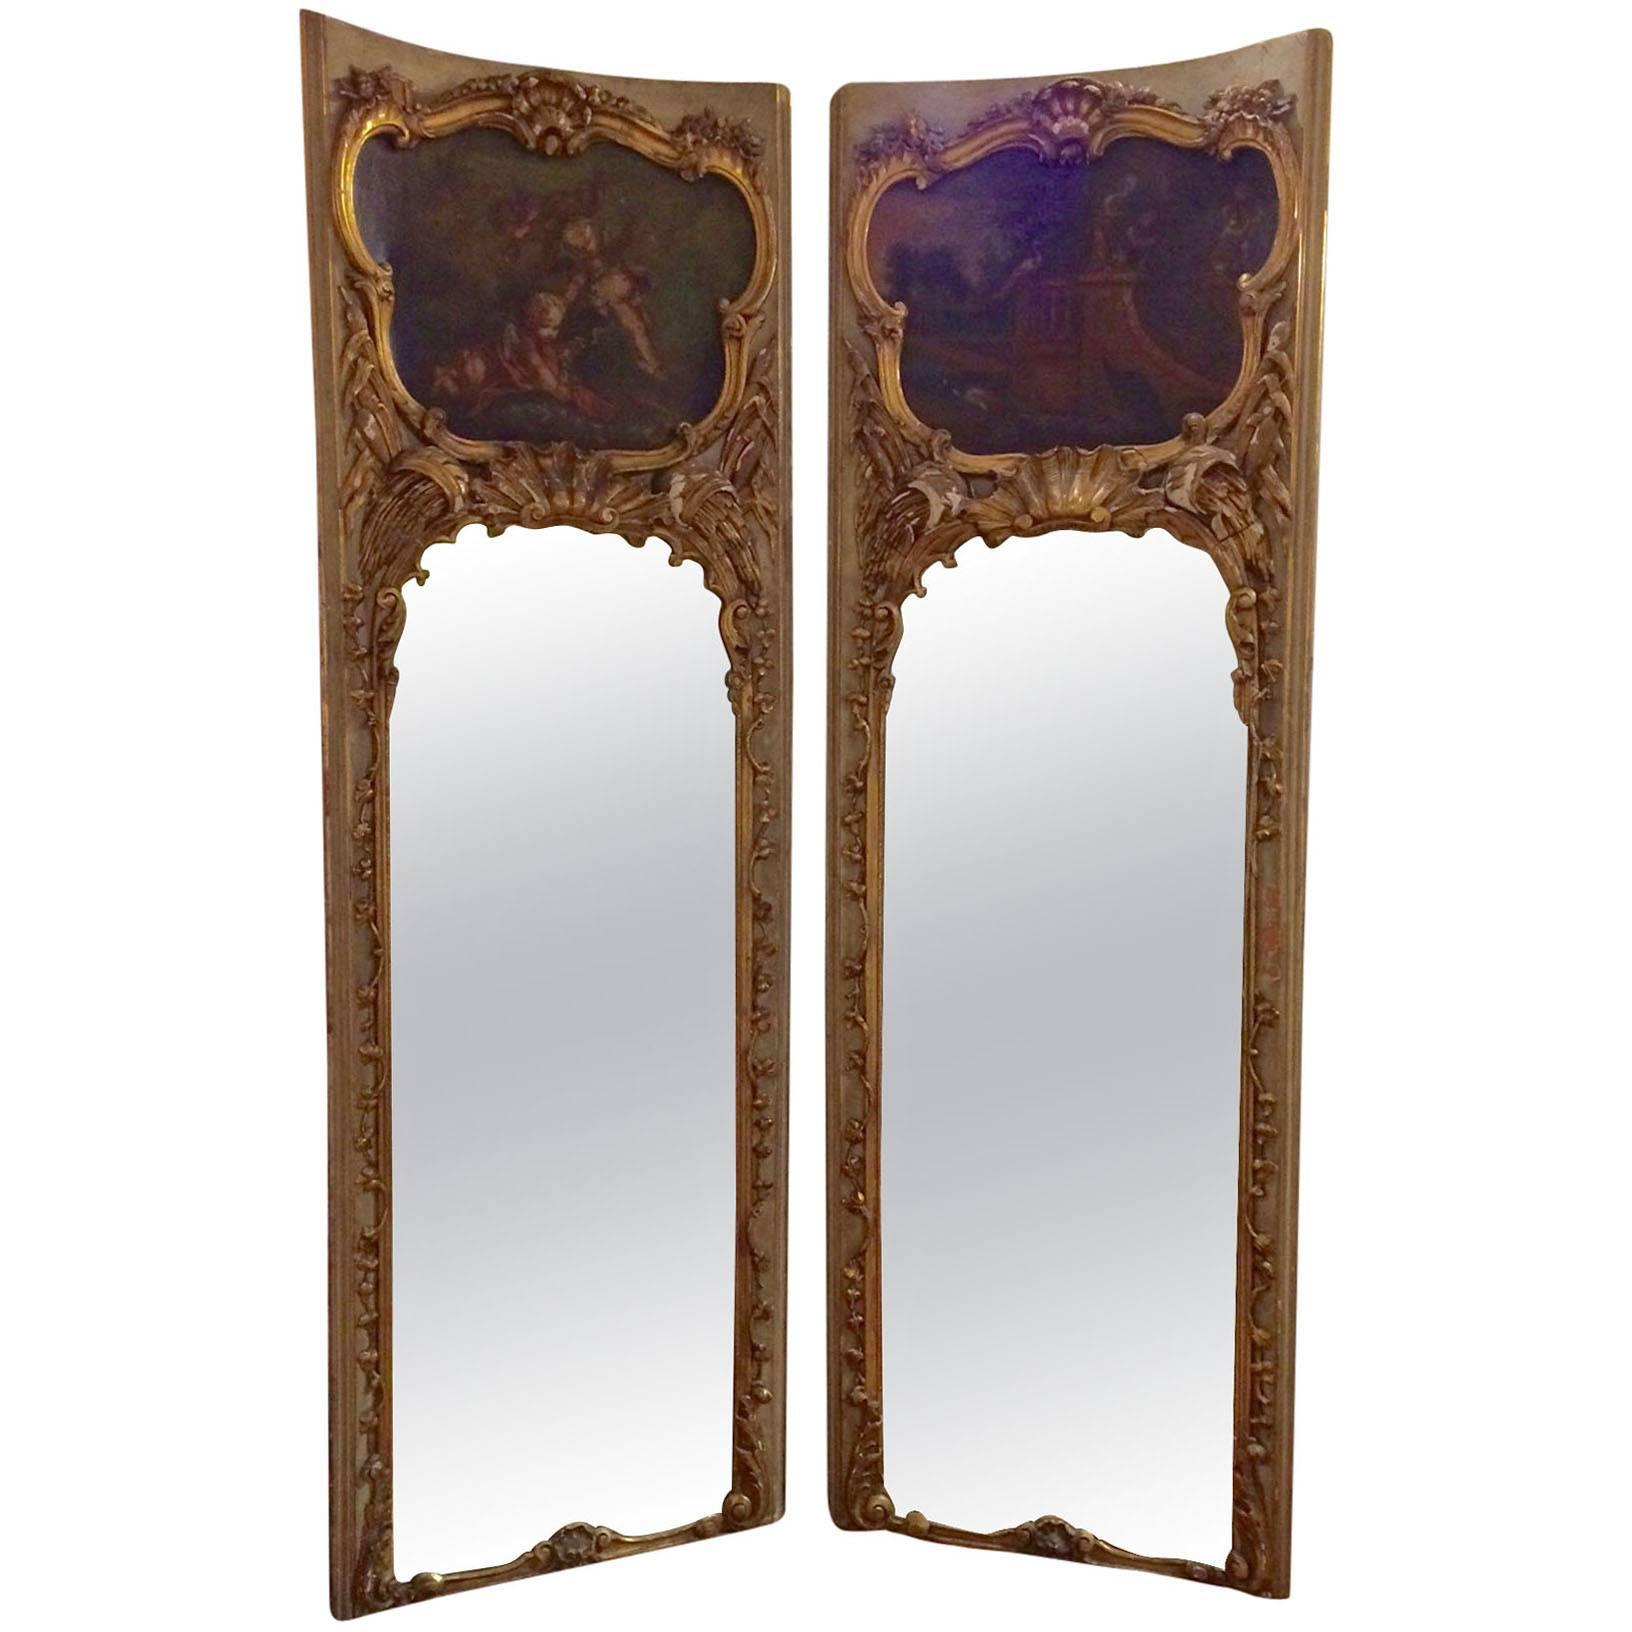 Splendid Pair of Very Tall Antique Mirrored Panels